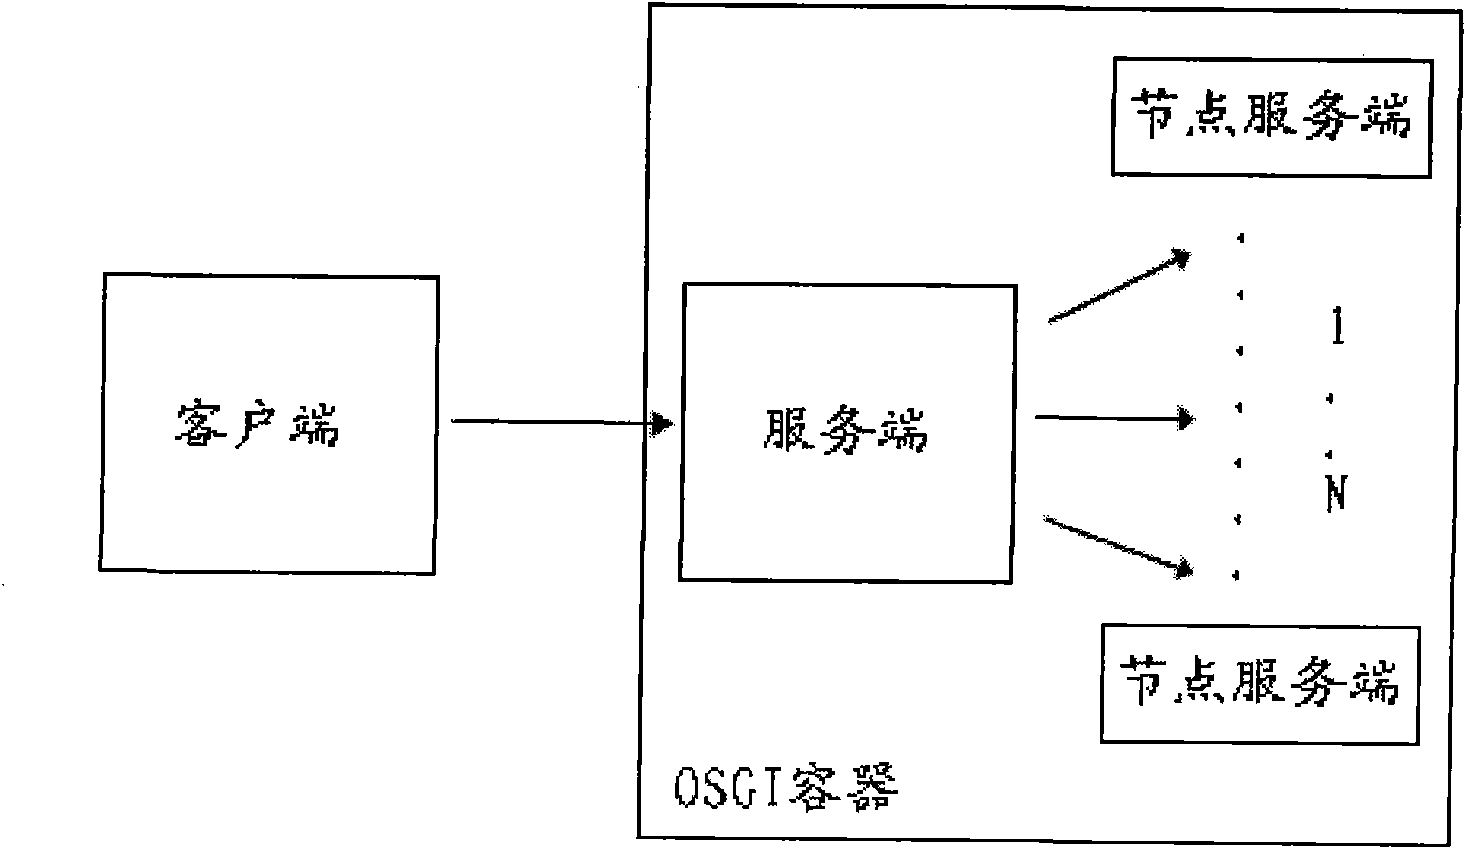 Distributed data storage method based on OSGI